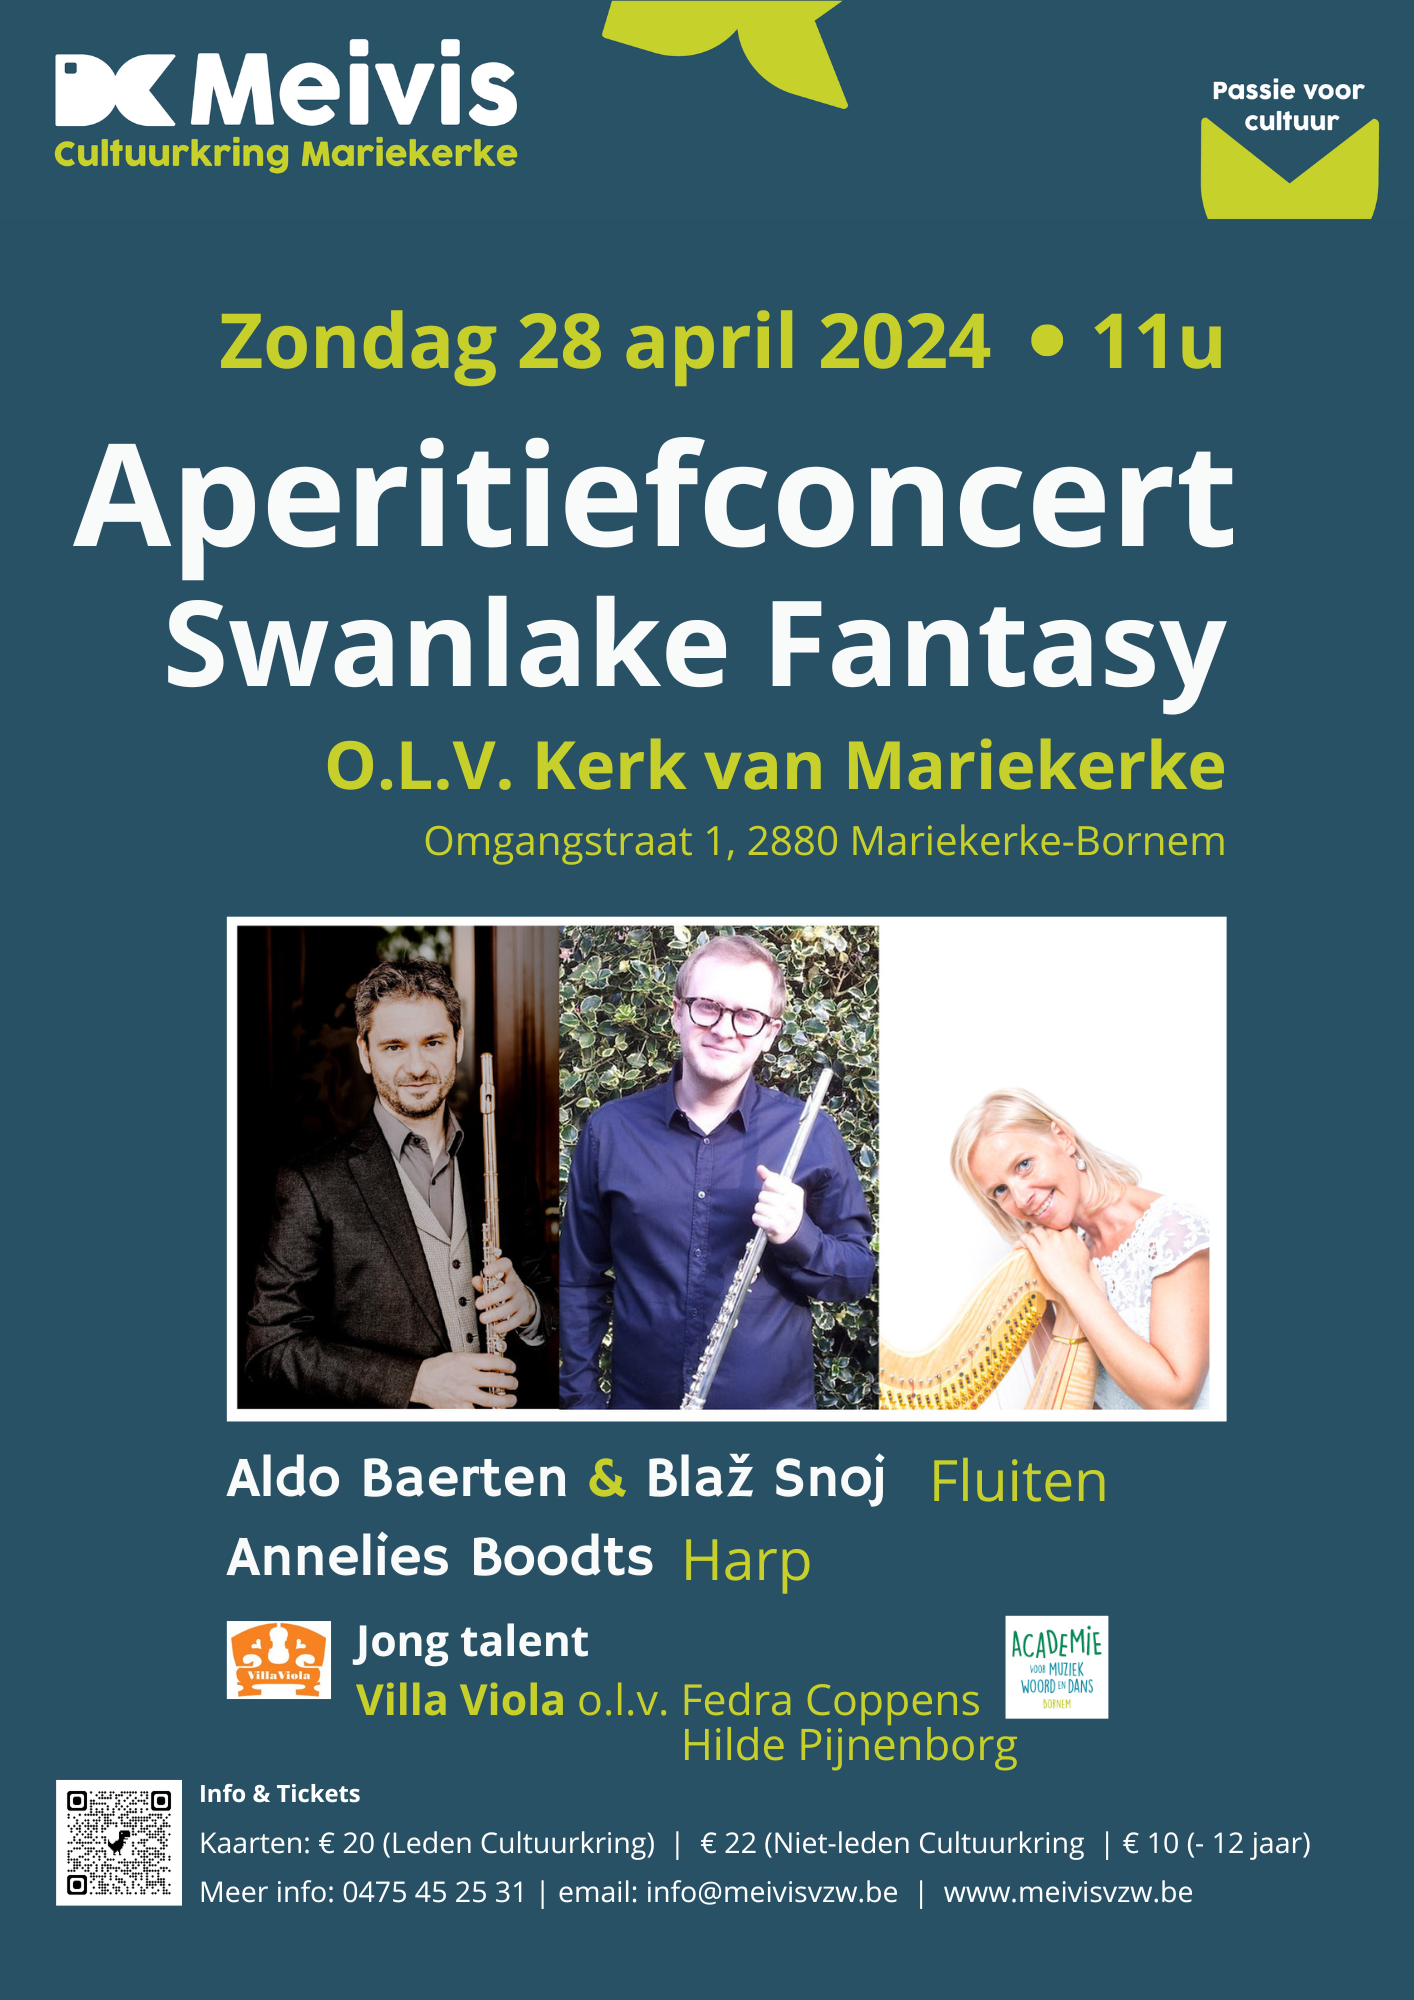 Zondag 28 april '24 Aperitiefconcert 'Swanlake Fantasy'